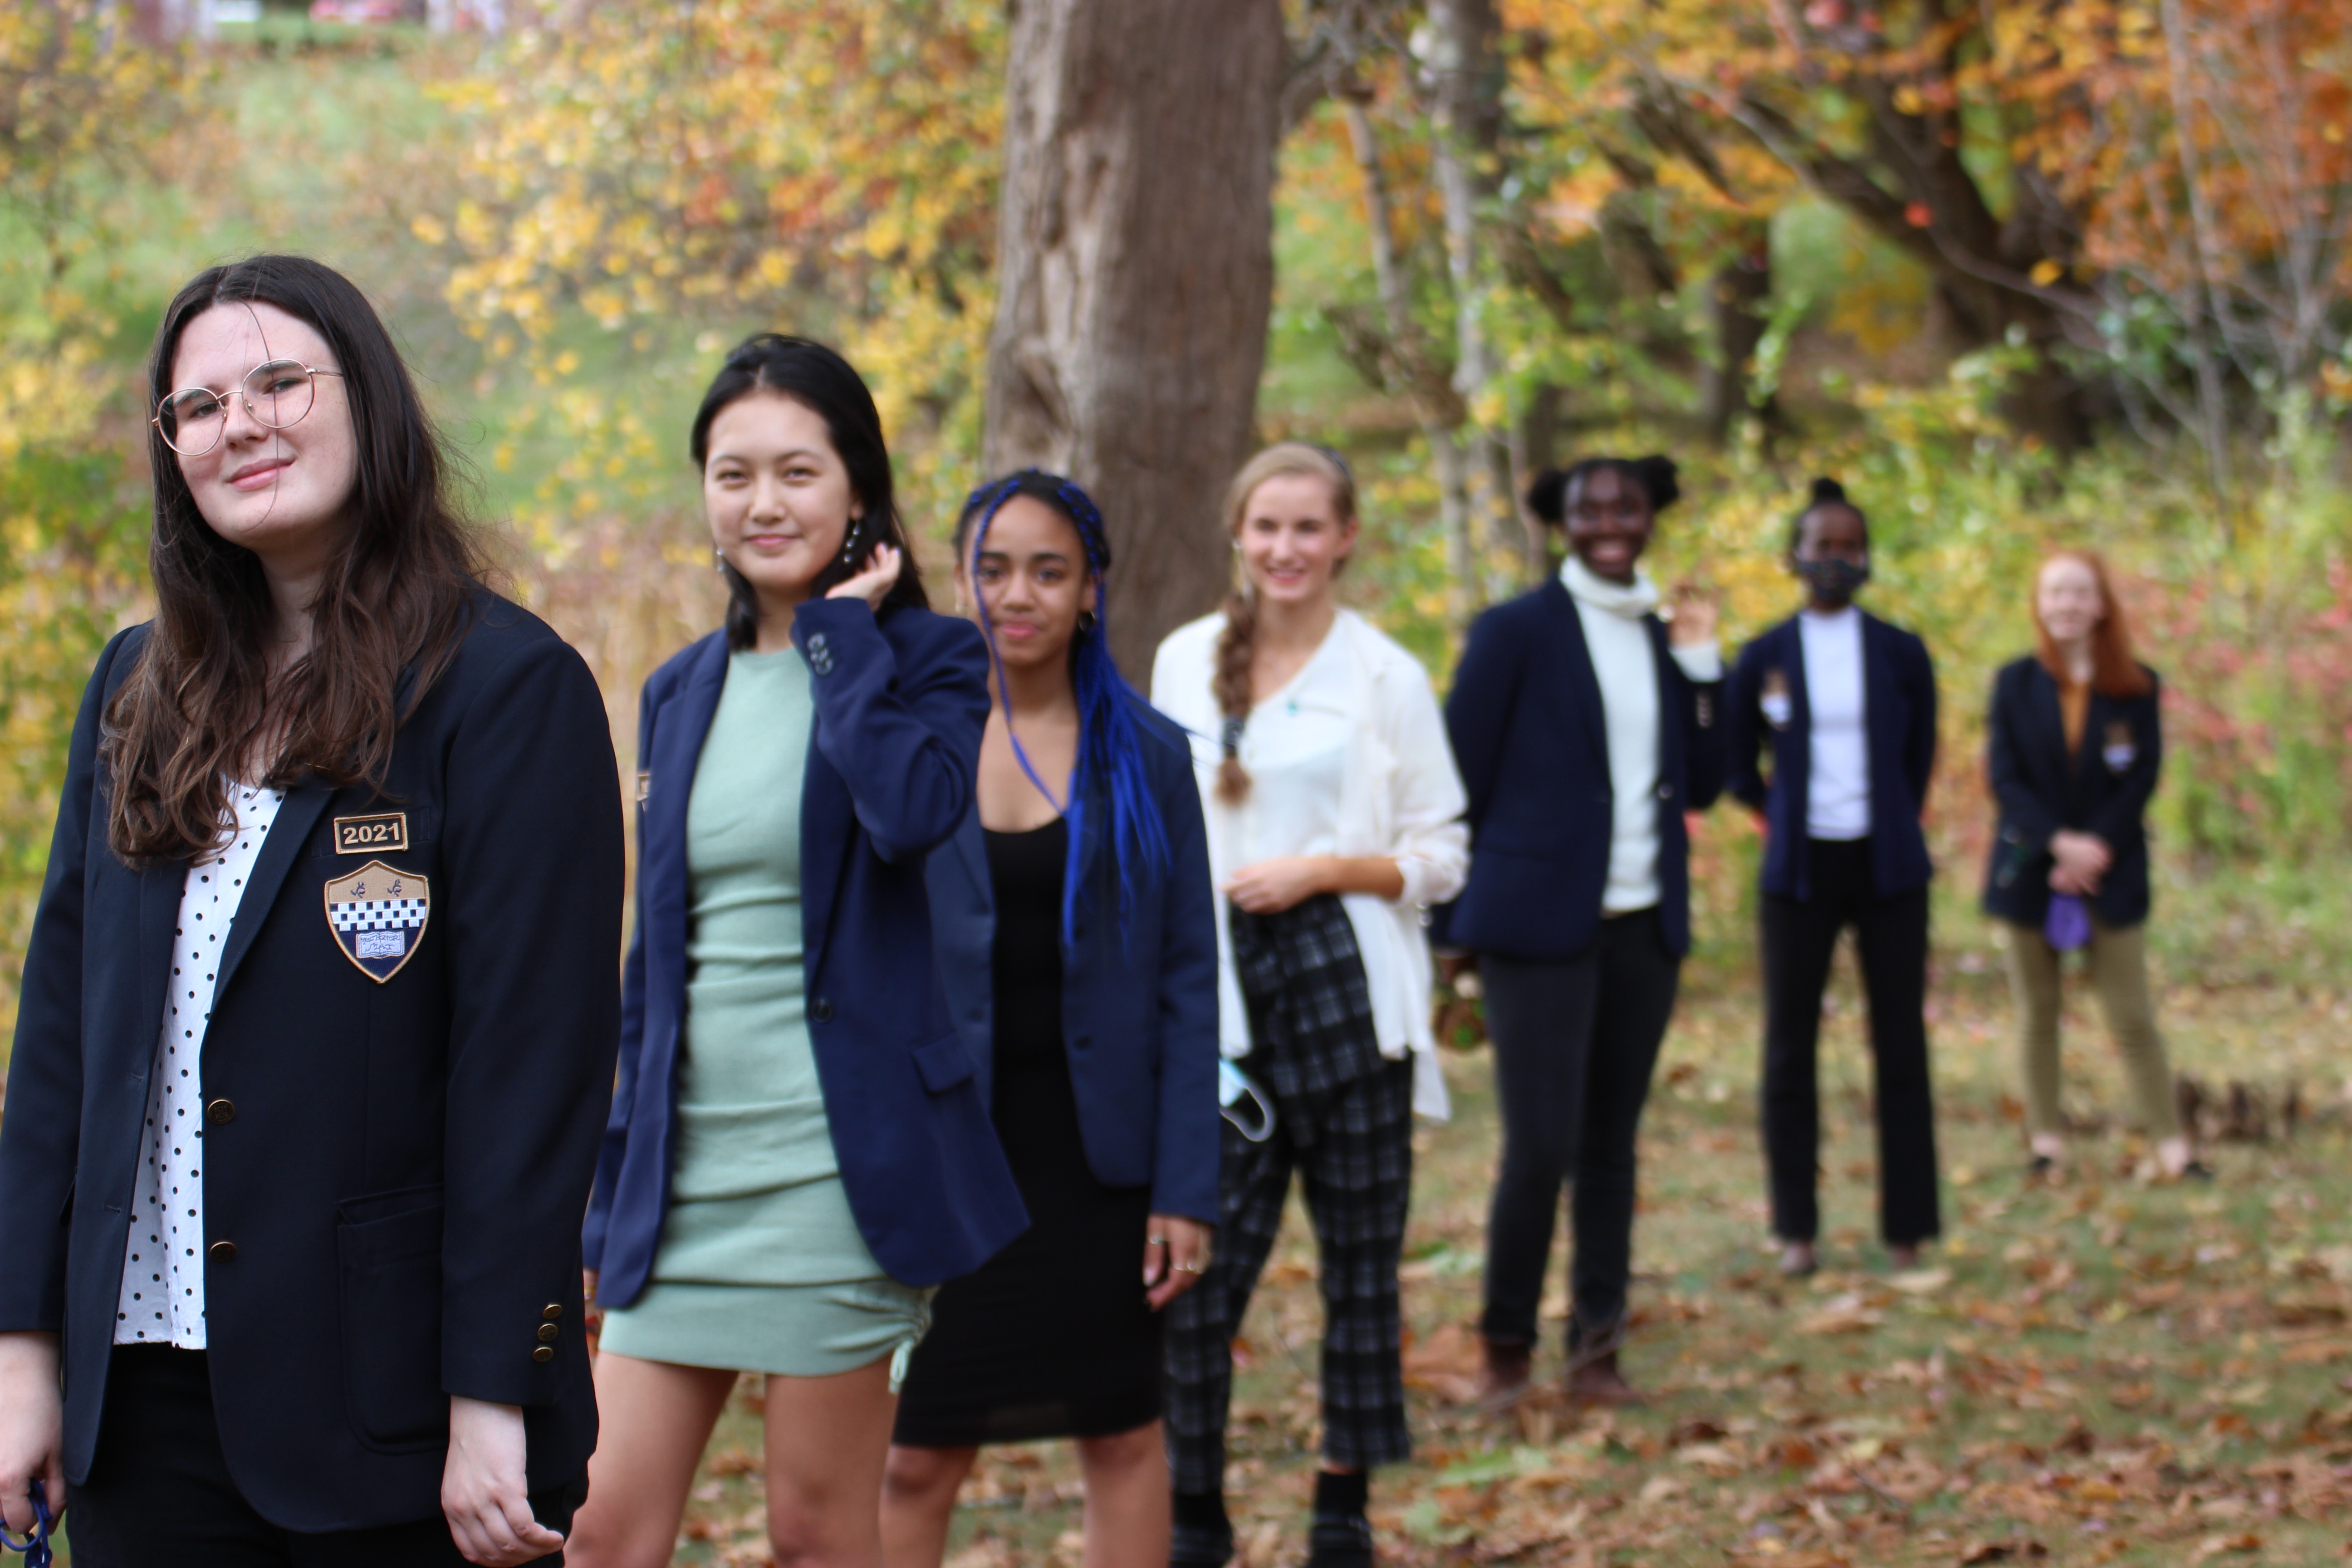 Miss Hall’s School: Empowering girls through leadership, internships and advocacy